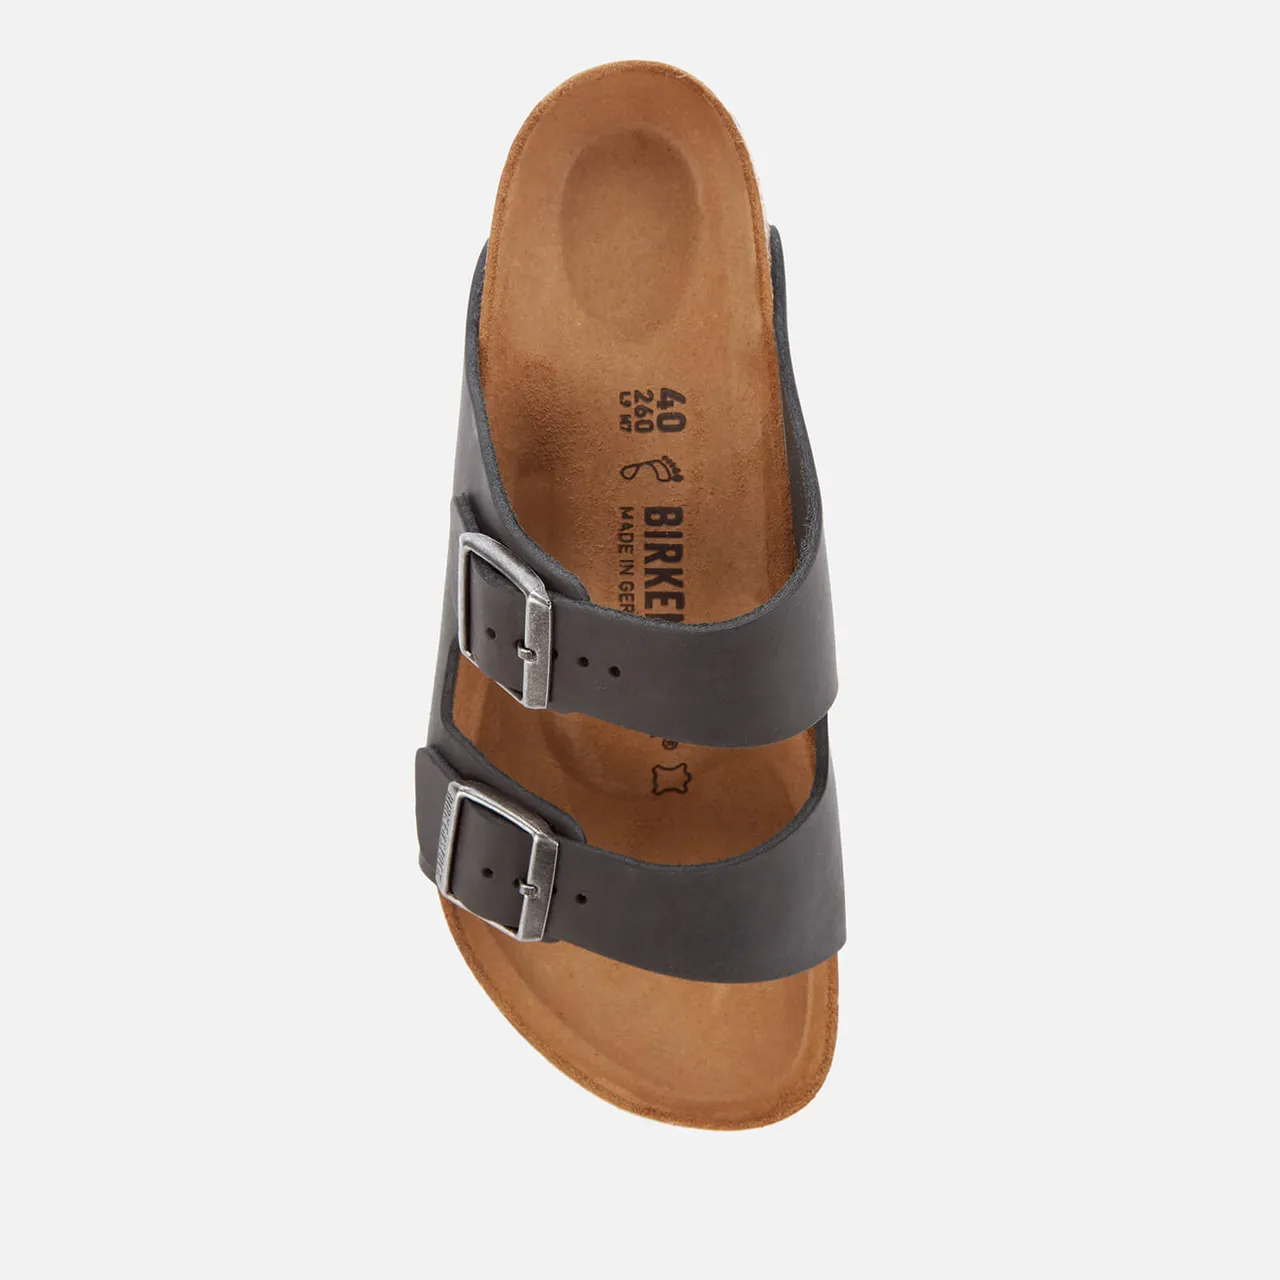 Birkenstock Men's Arizona Oiled Leather Double Strap Sandals - Black - EU 41/UK